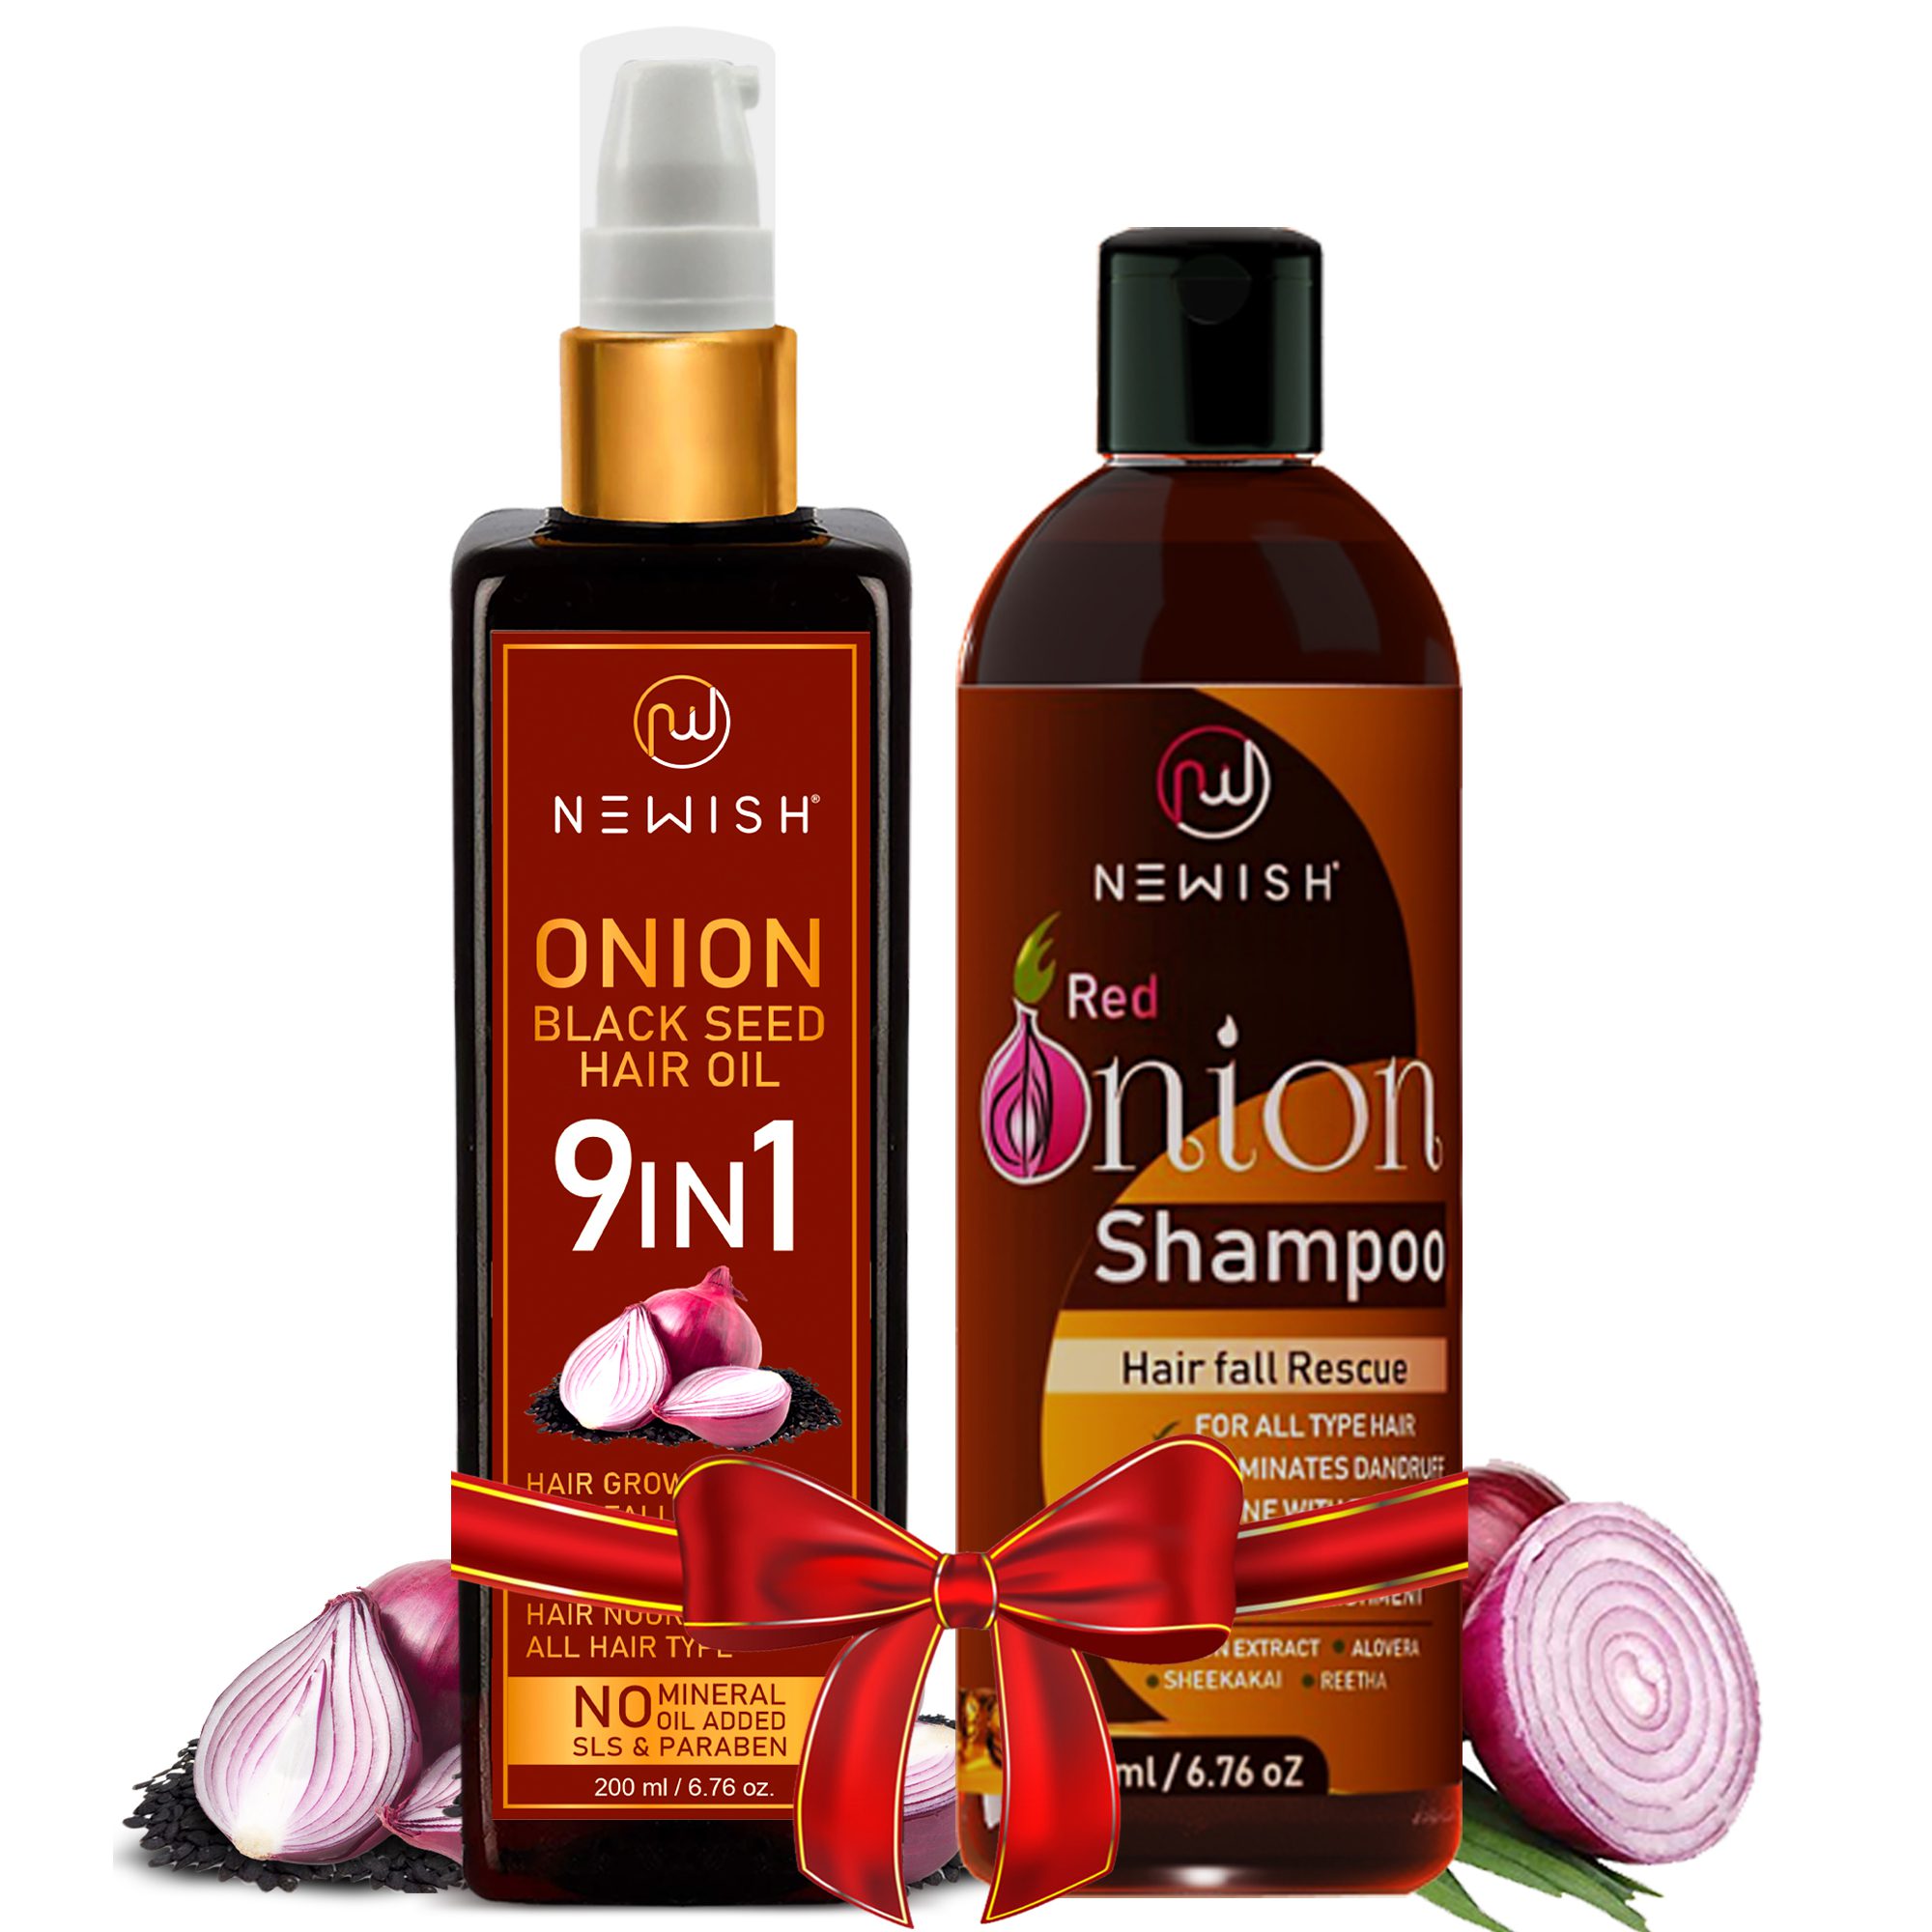 onion oil and shampoo for hair